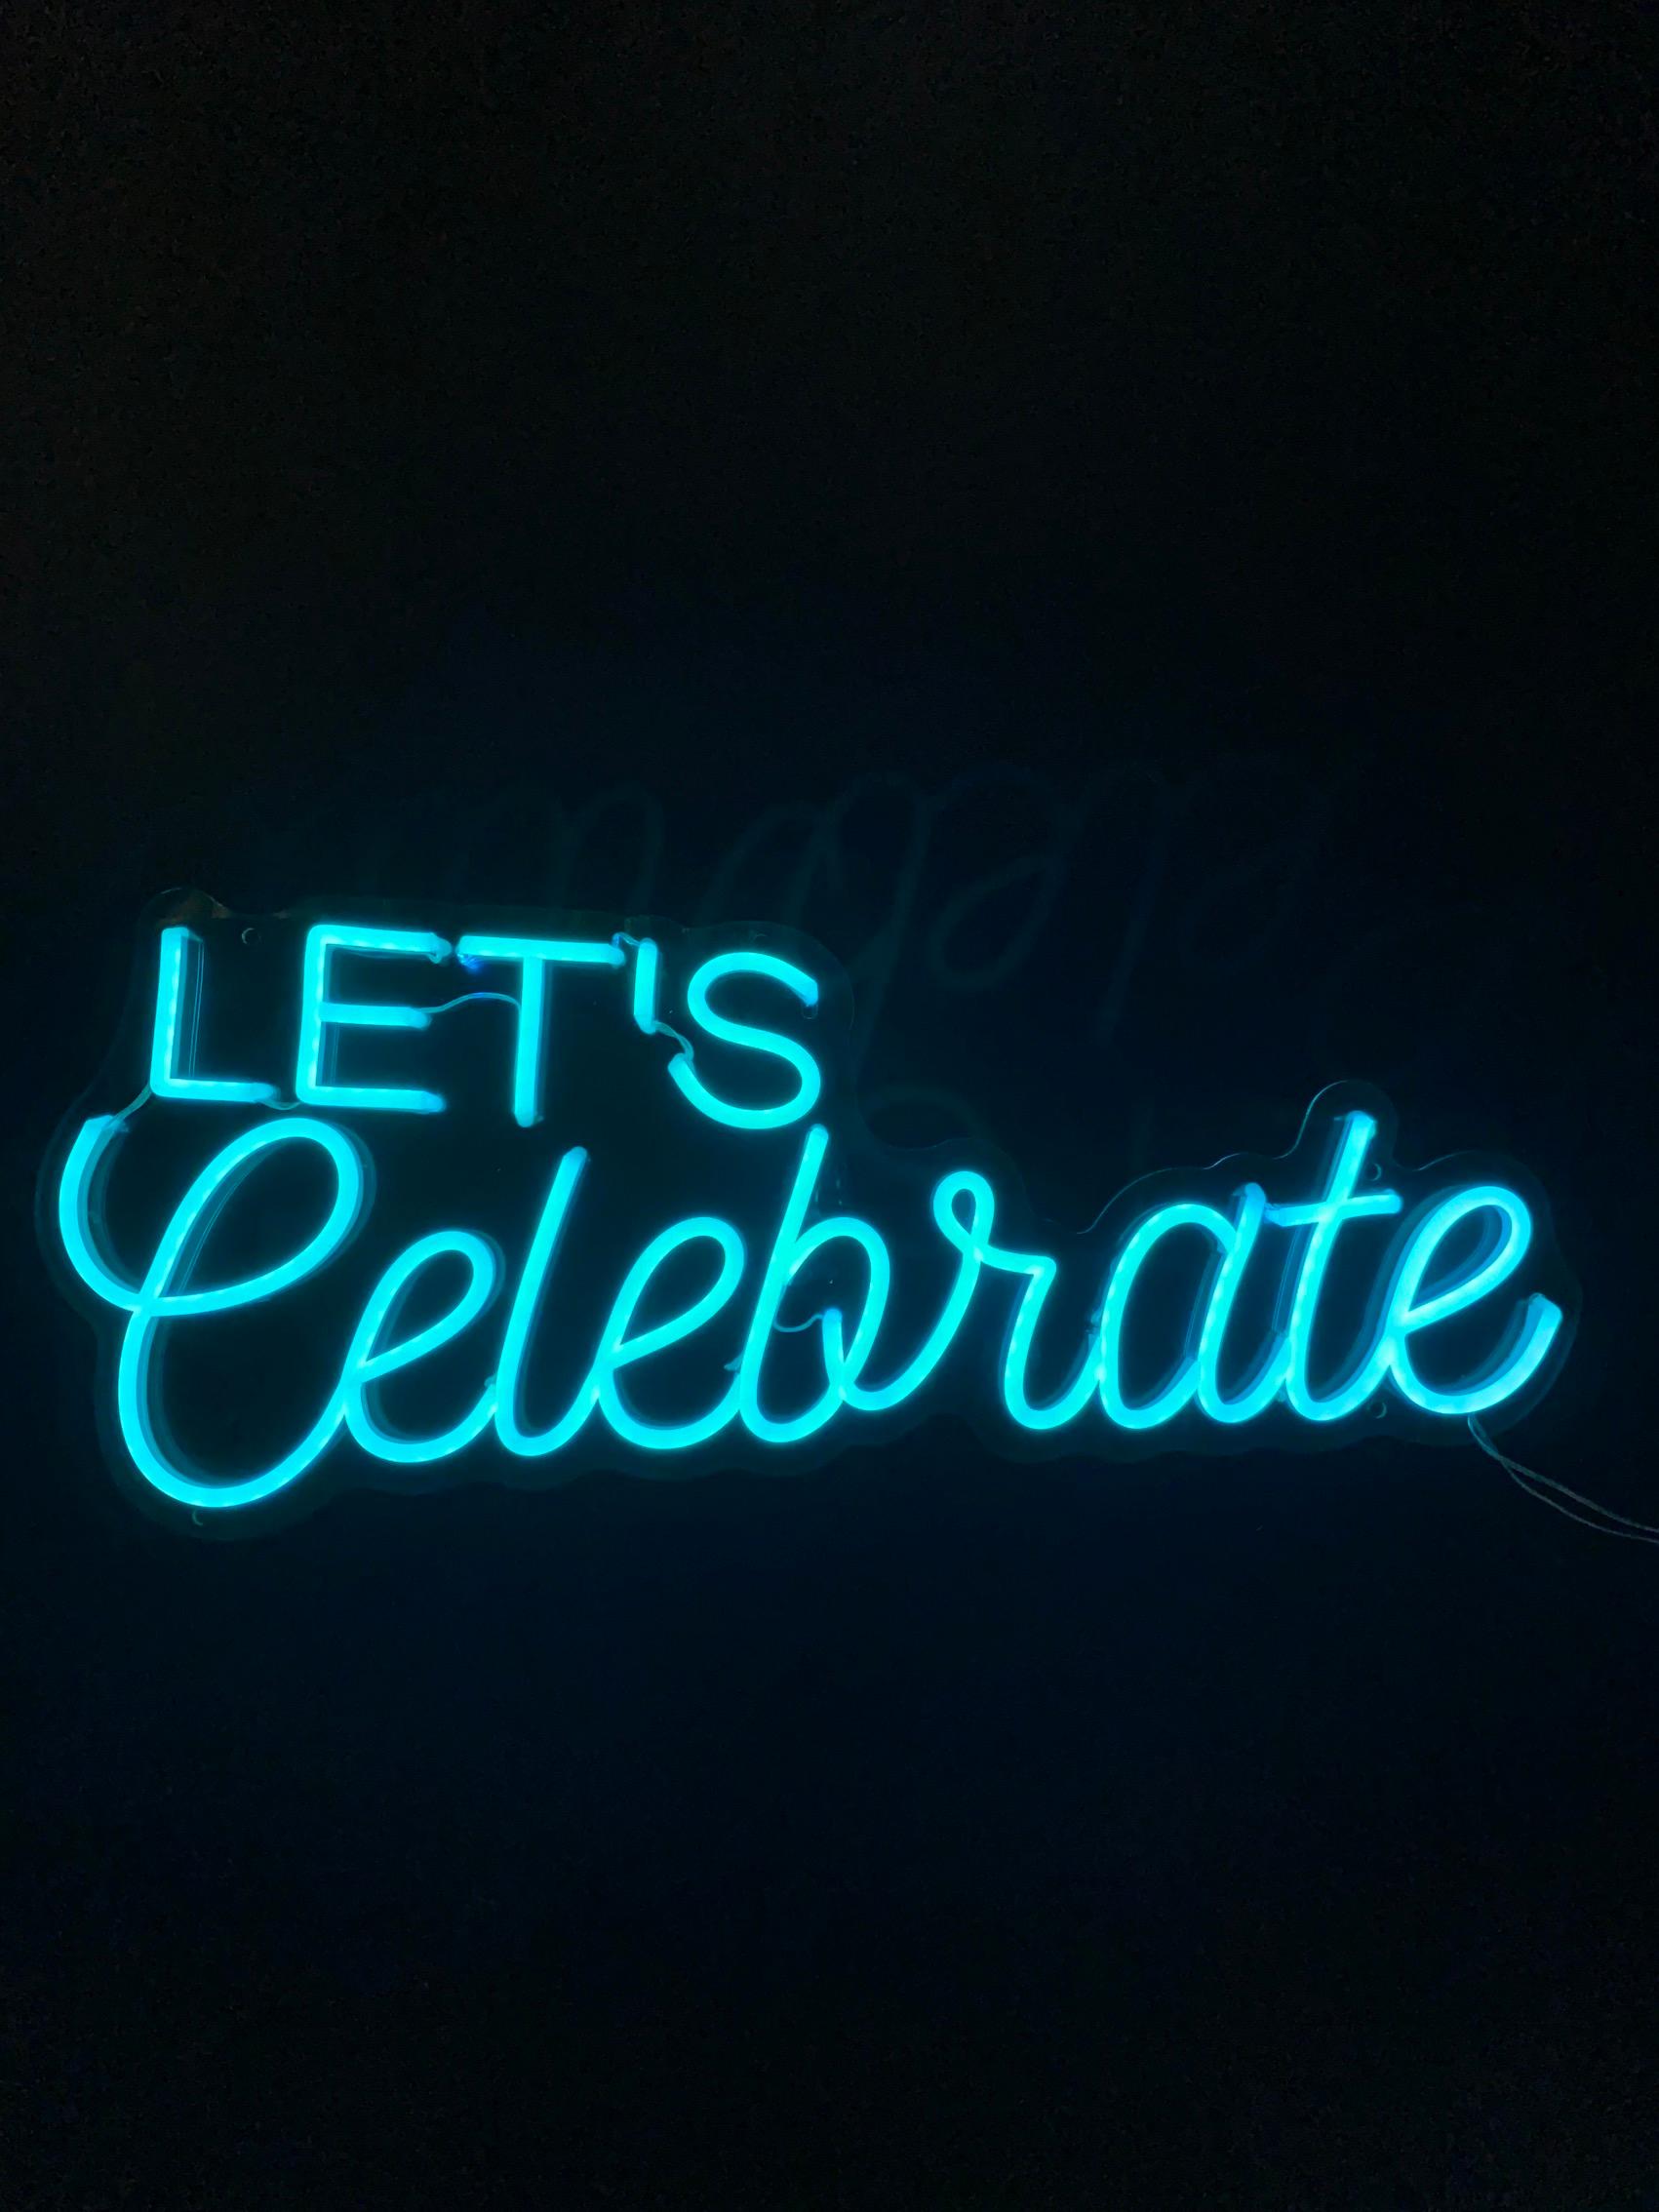 Let's Celebrate neon sign